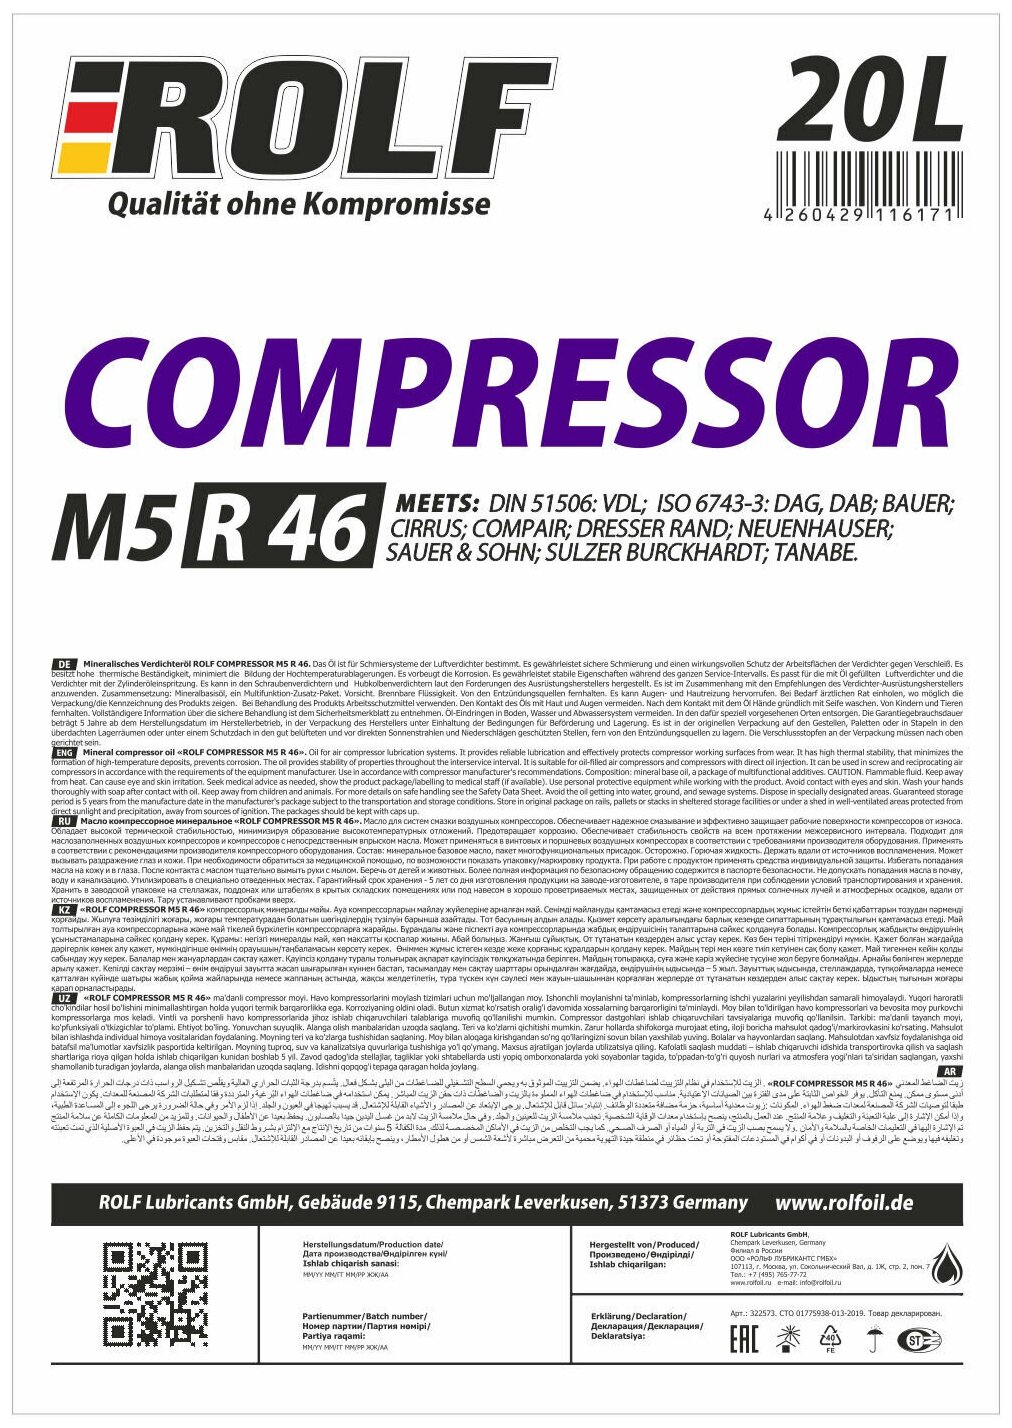 Масло компрессорное ROLF COMPRESSOR M5 R 46 20L